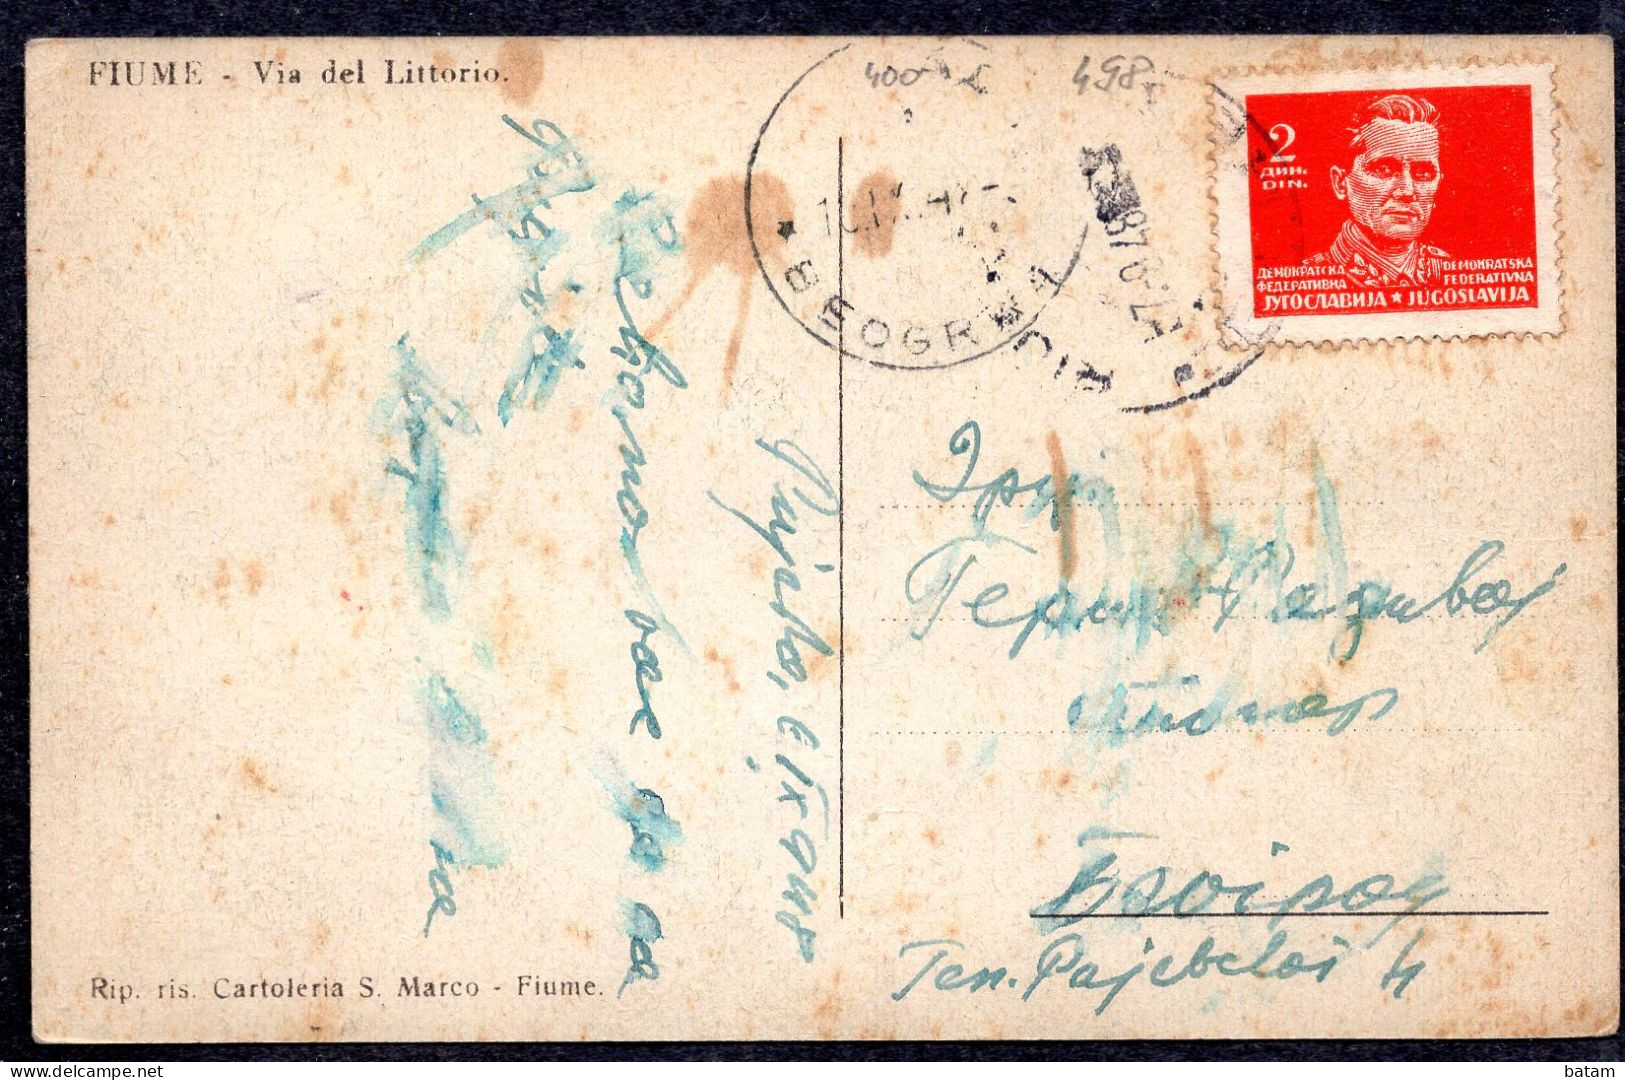 498 - Croatia - Rijeka 1948 - Postcard - Croacia